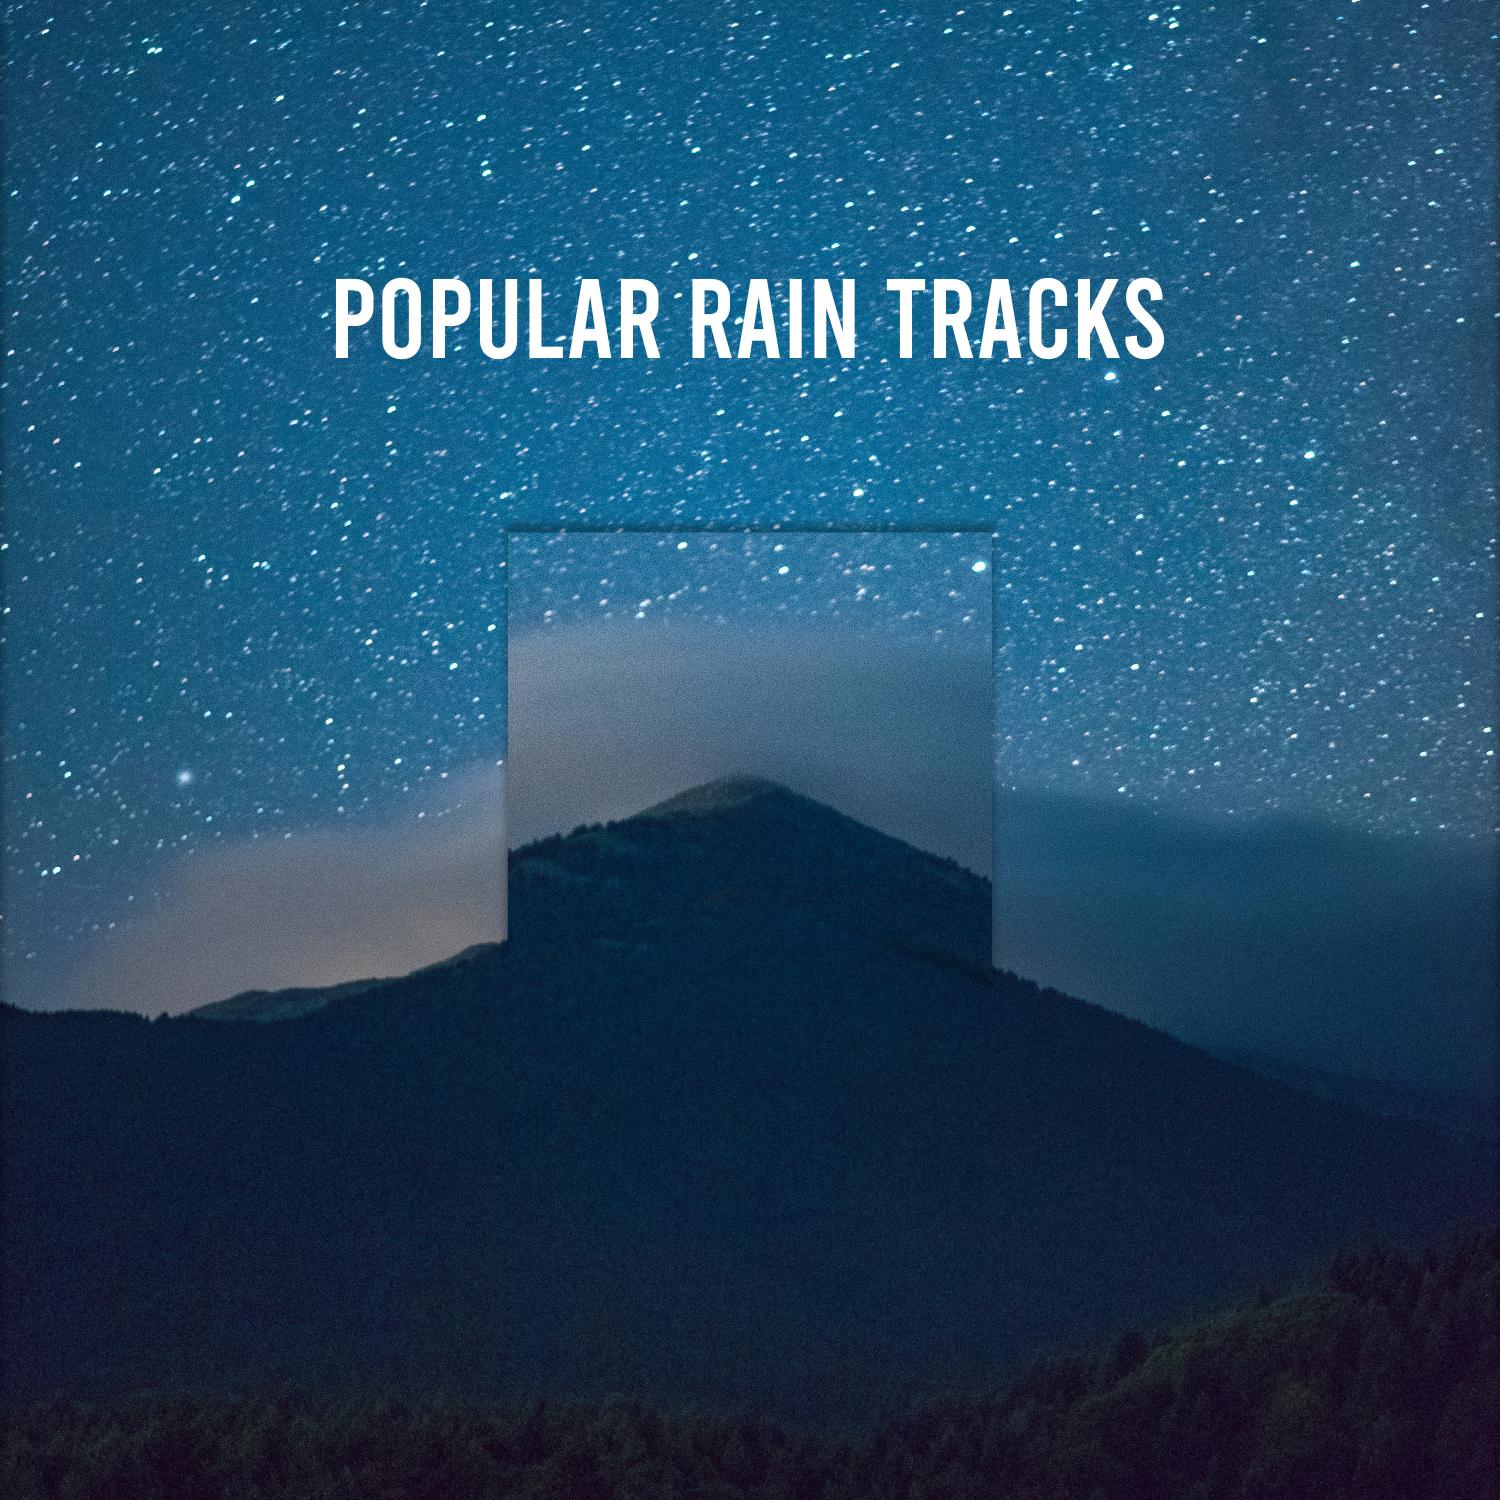 13 Popular Rain Tracks to Unwind & Relax